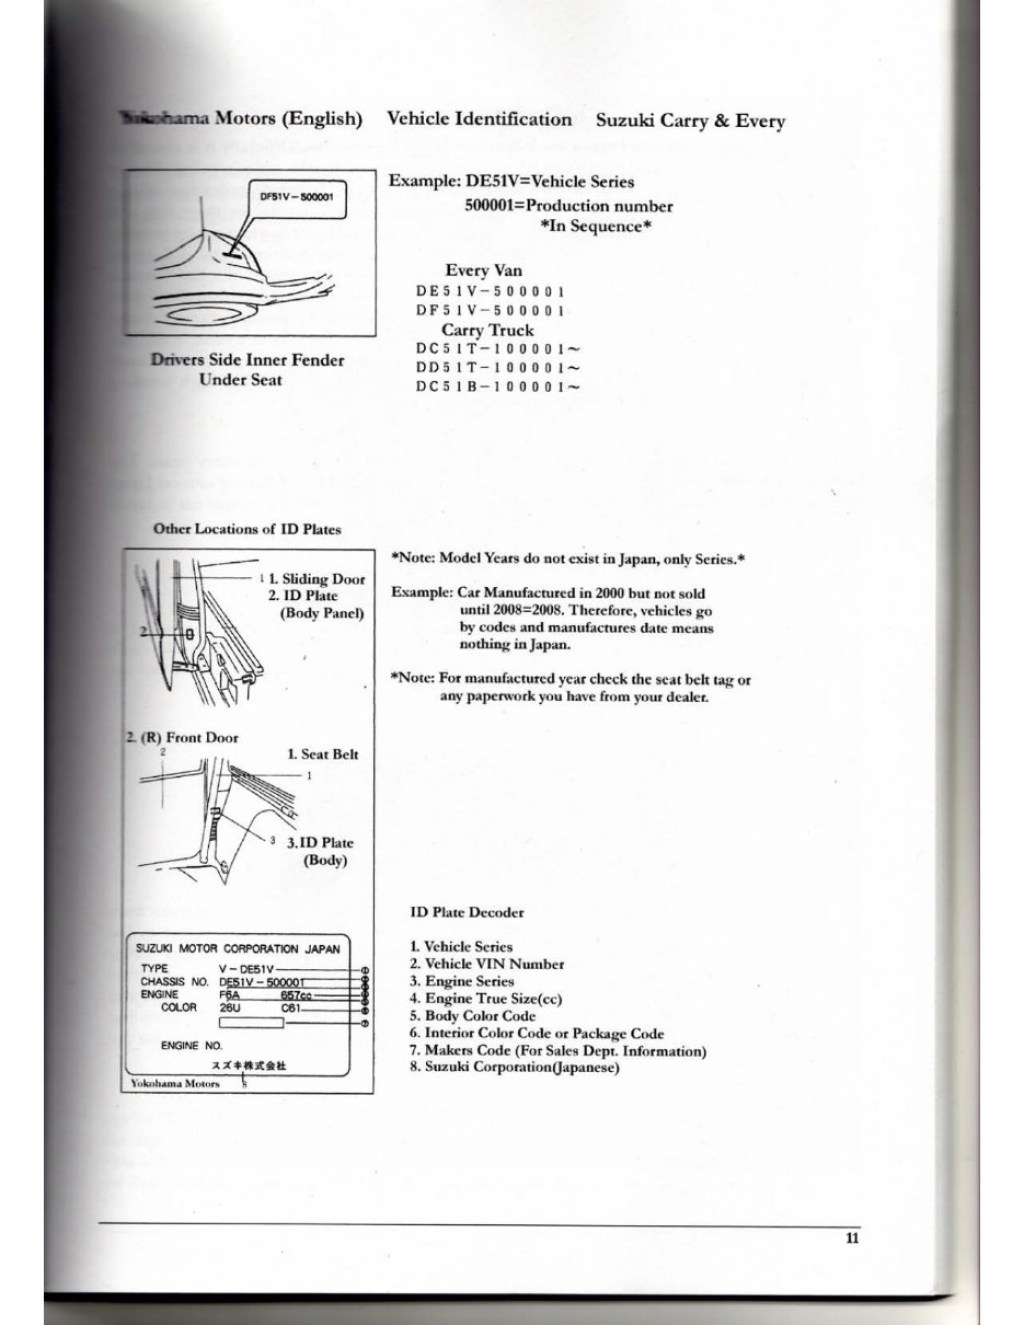 12 valve suzuki f6a engine manual - SUZUKI CARRY EVERY VAN FA Engine Workshop Service Manual